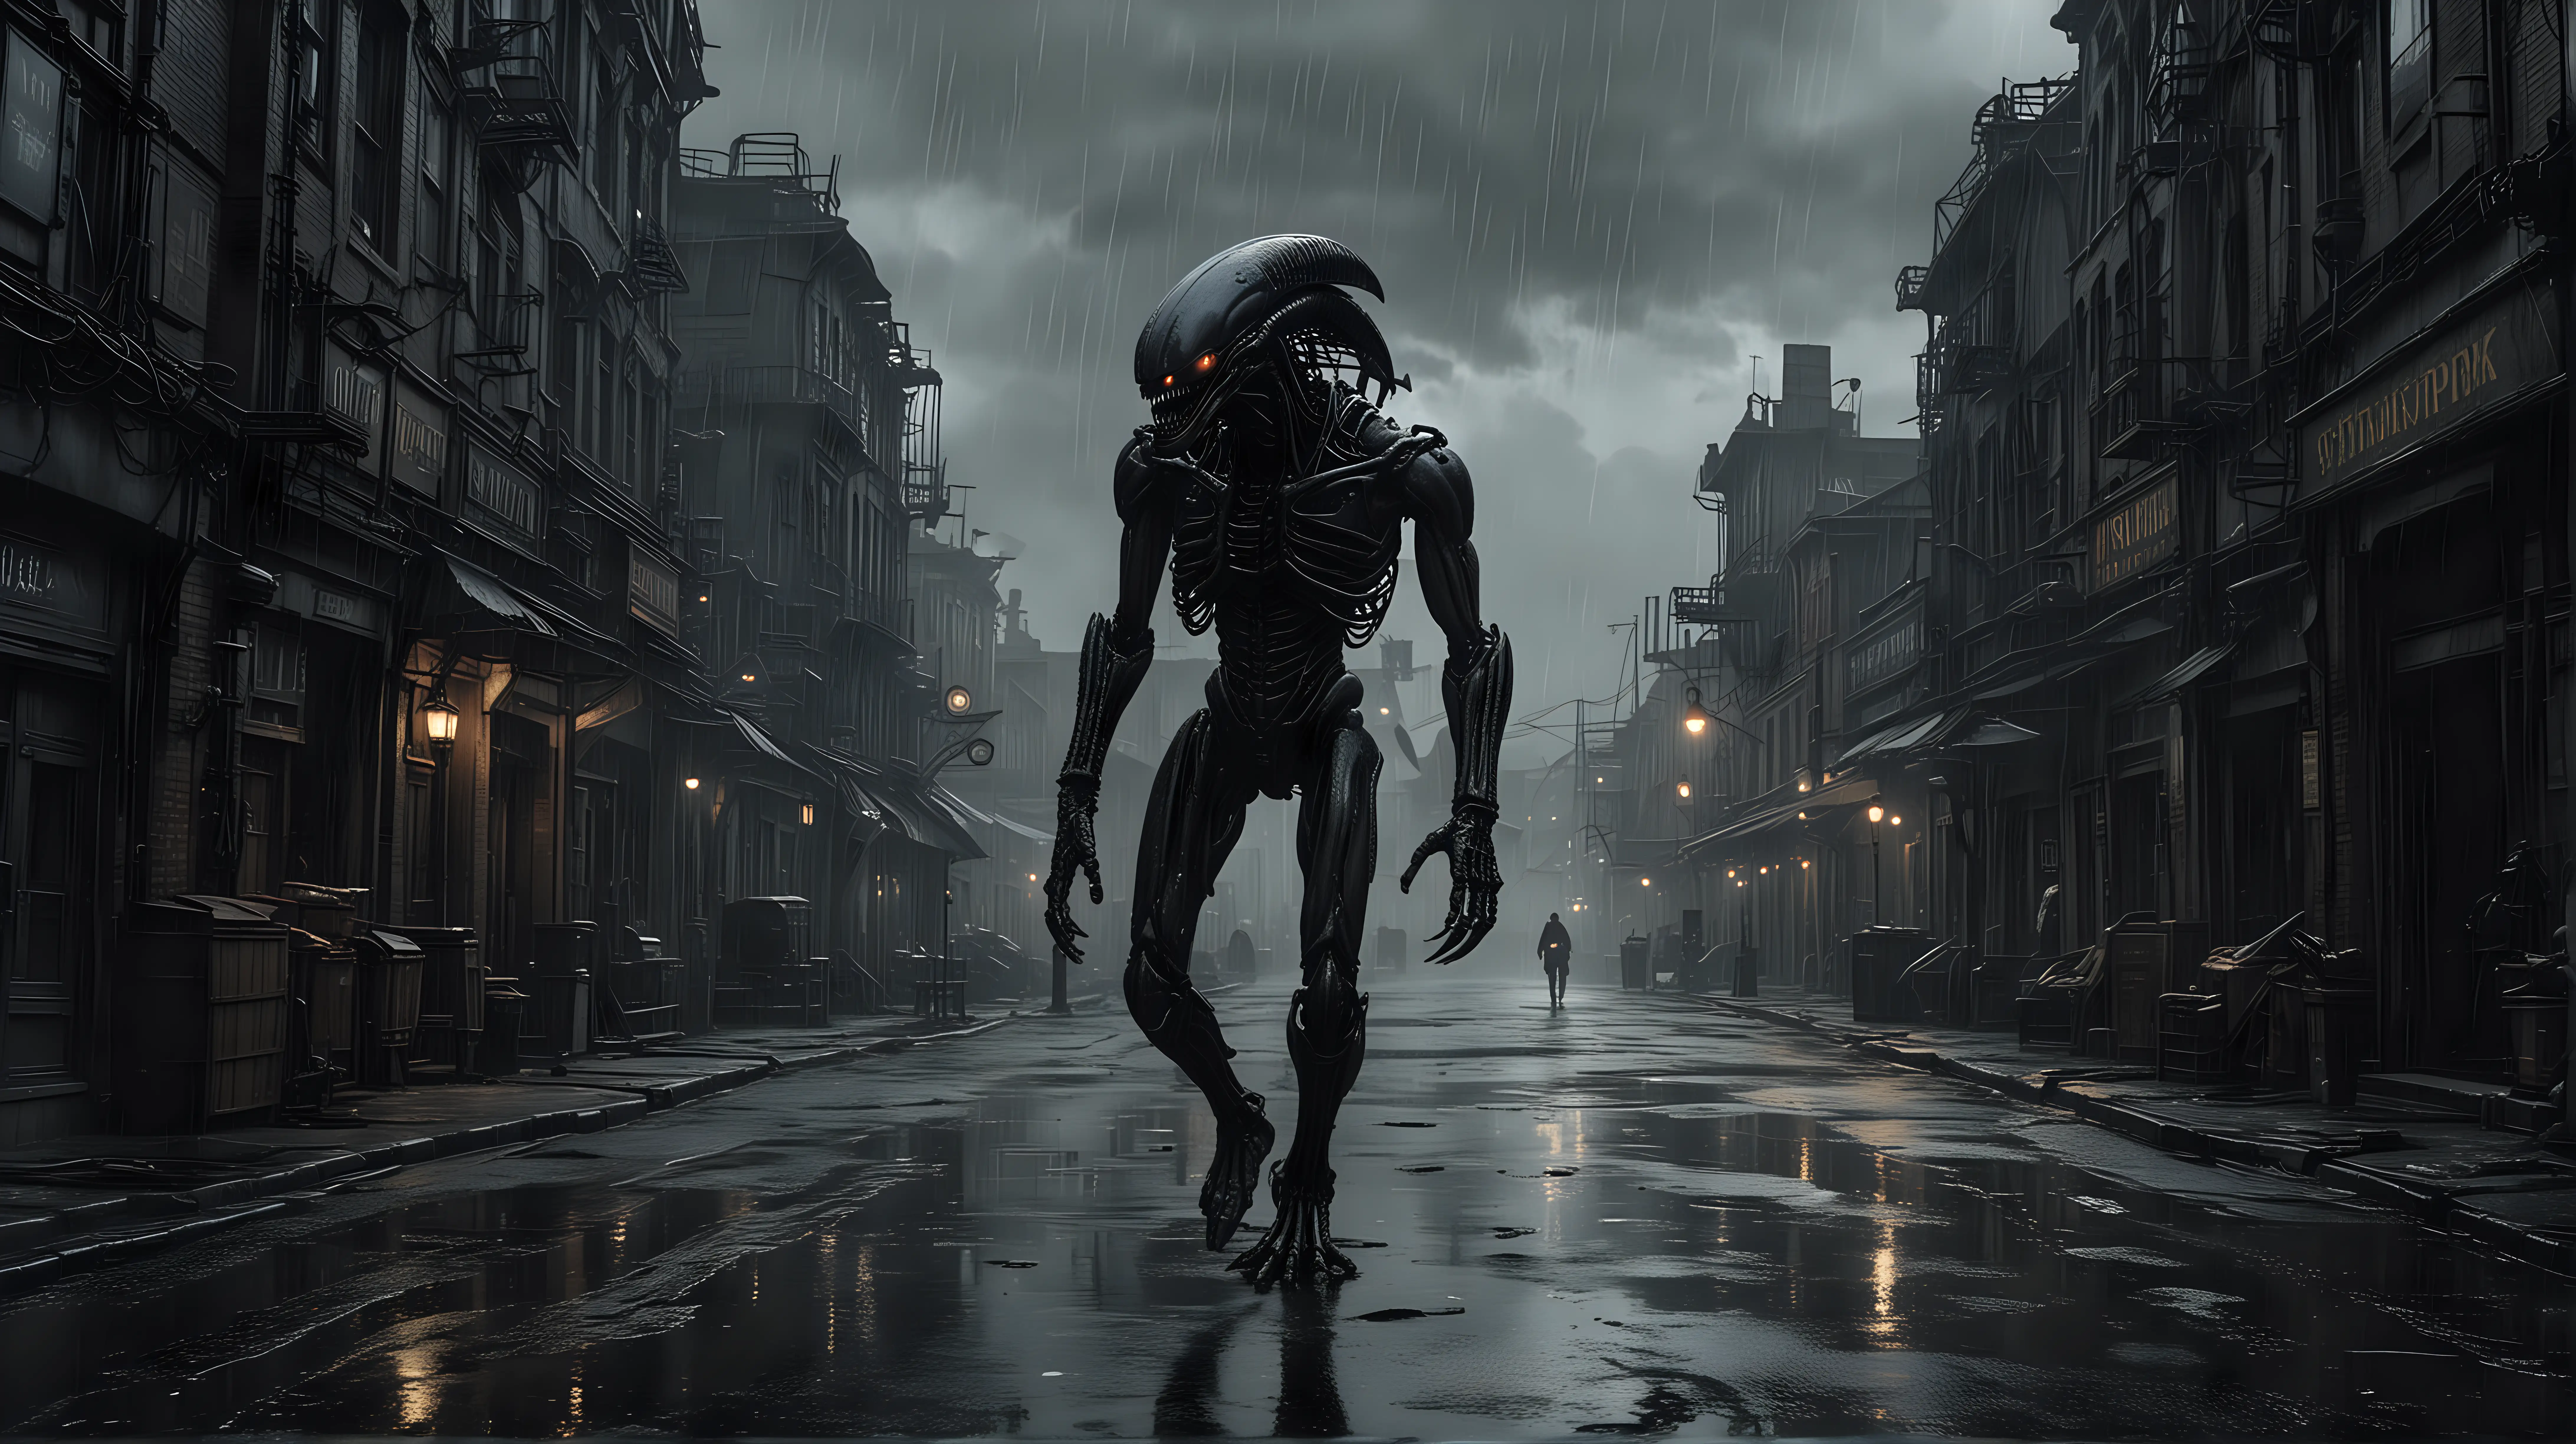 a xenomorph walks through the empty street of a steampunk city, dark, cloudy, heavy rain